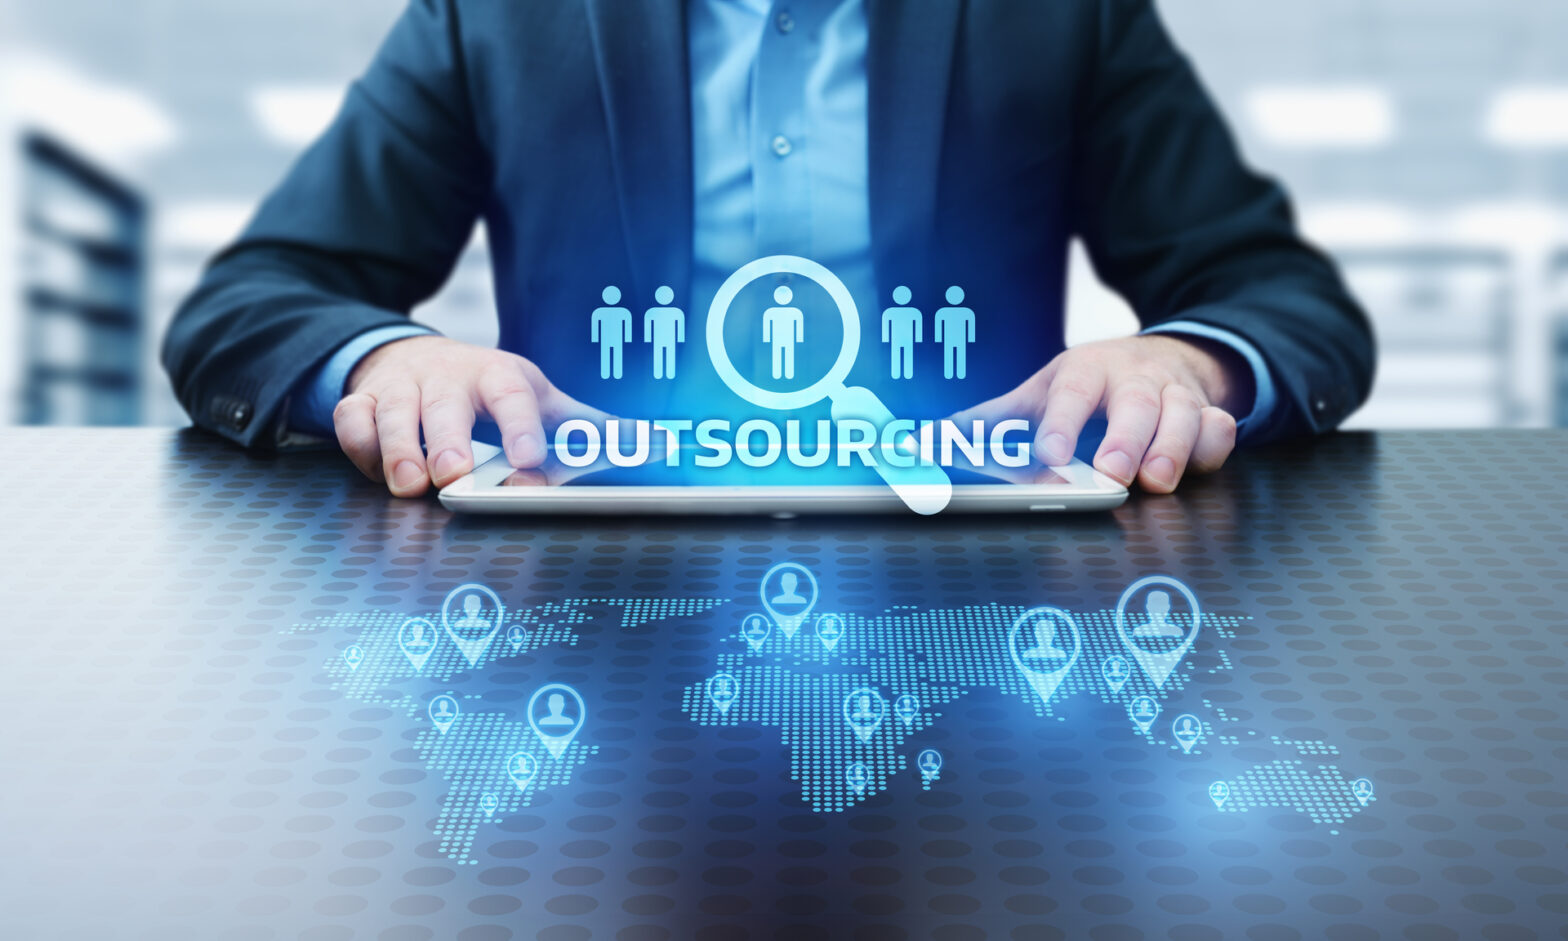 Formulation Development Outsourcing Market